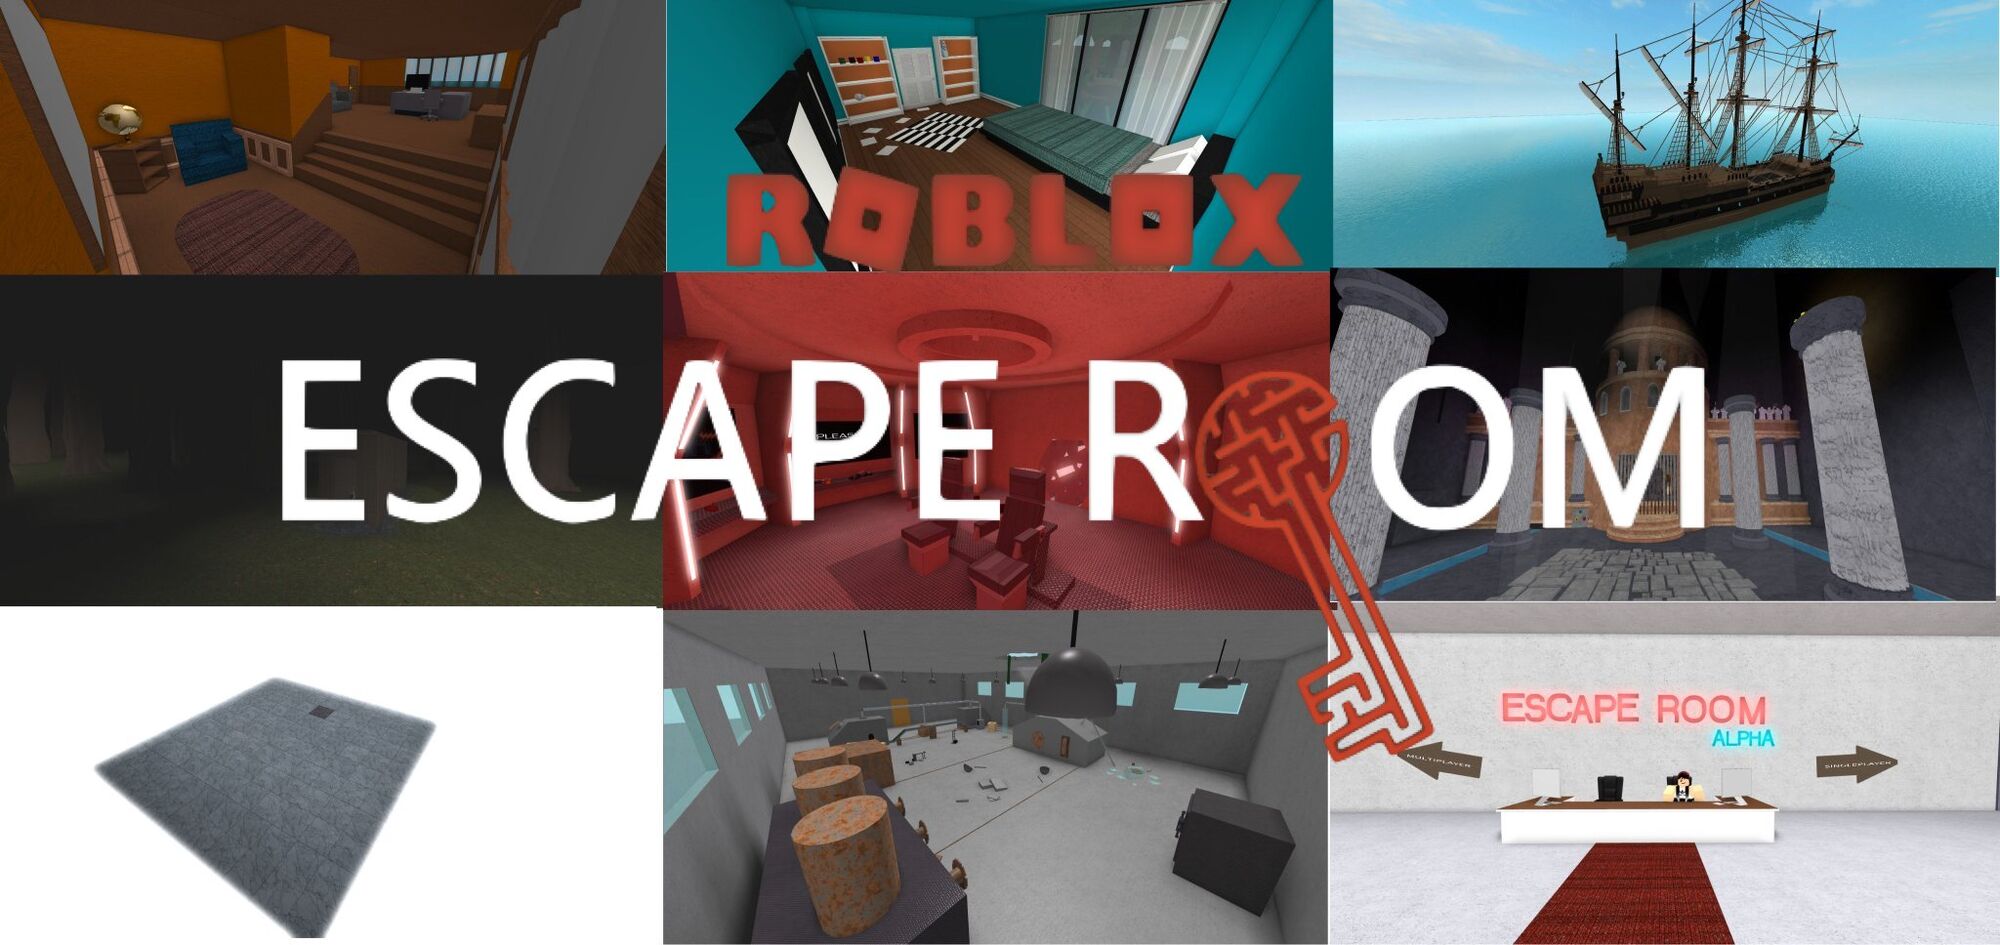 Roblox escape room multiplayer. Эскейп рум РОБЛОКС. Побег из комнаты в РОБЛОКСЕ. Escape Room Roblox codes. Эскейп рум РОБЛОКС код.